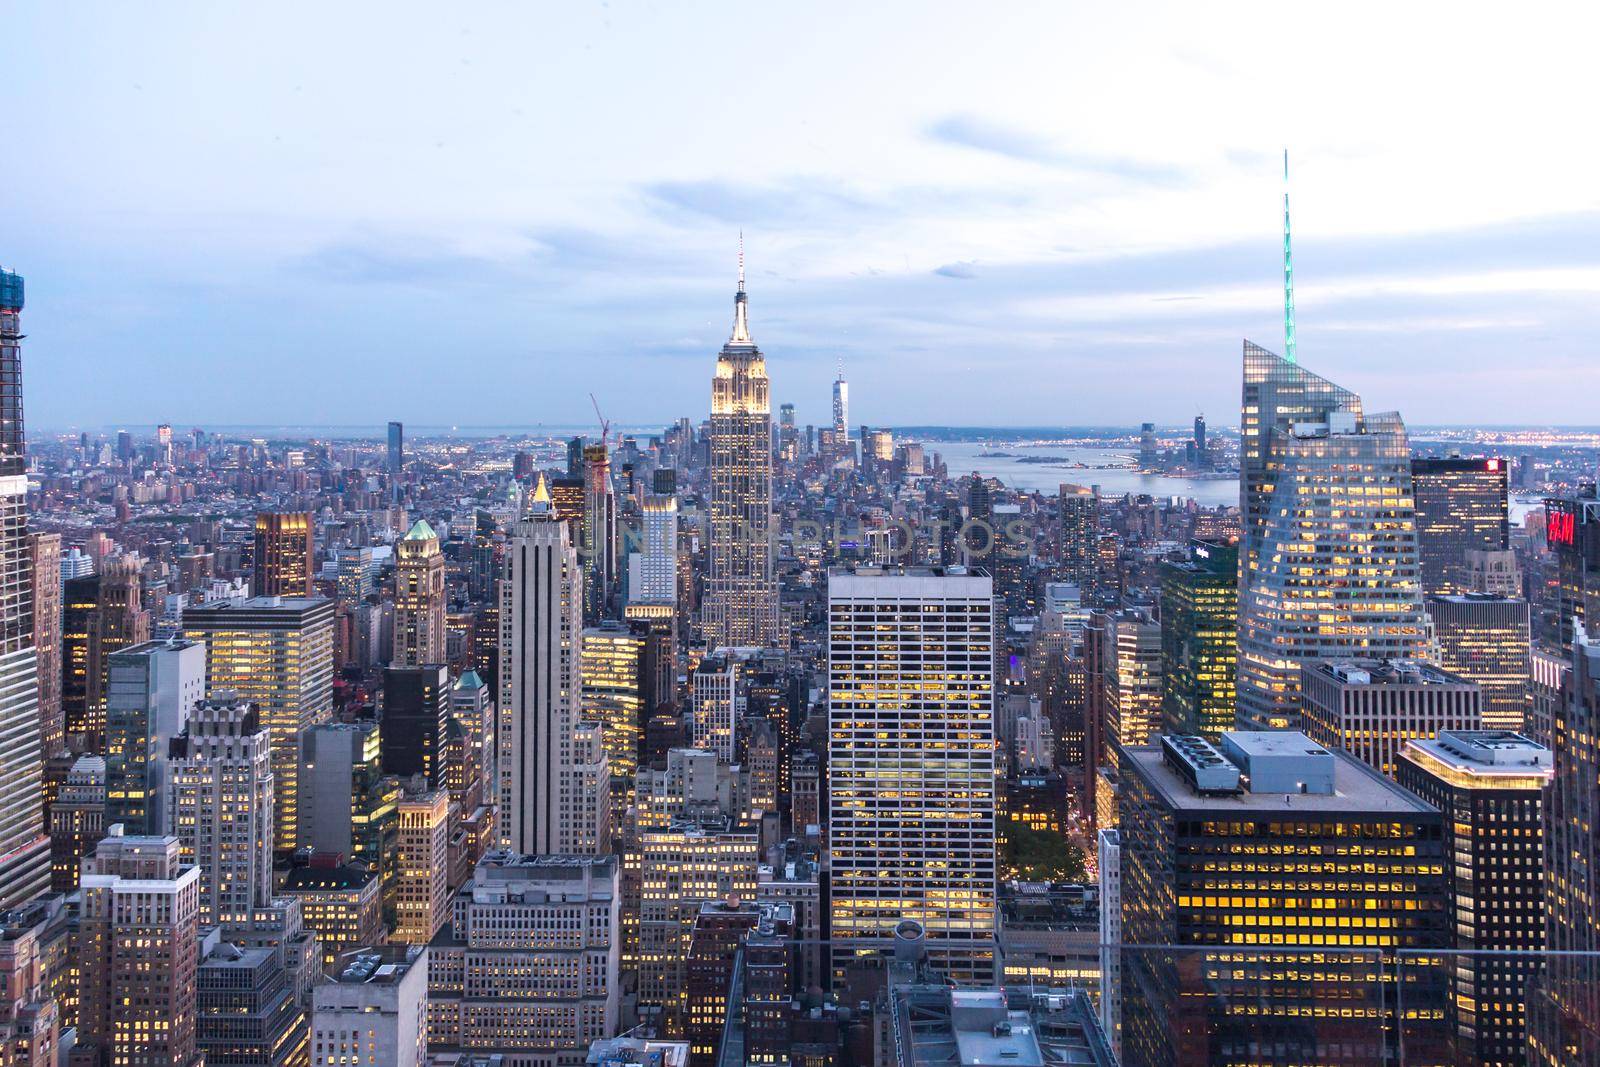 NEW YORK, USA - MAY 15, 2019: Aerial view of New York city at night, Manhattan, USA by Mariakray